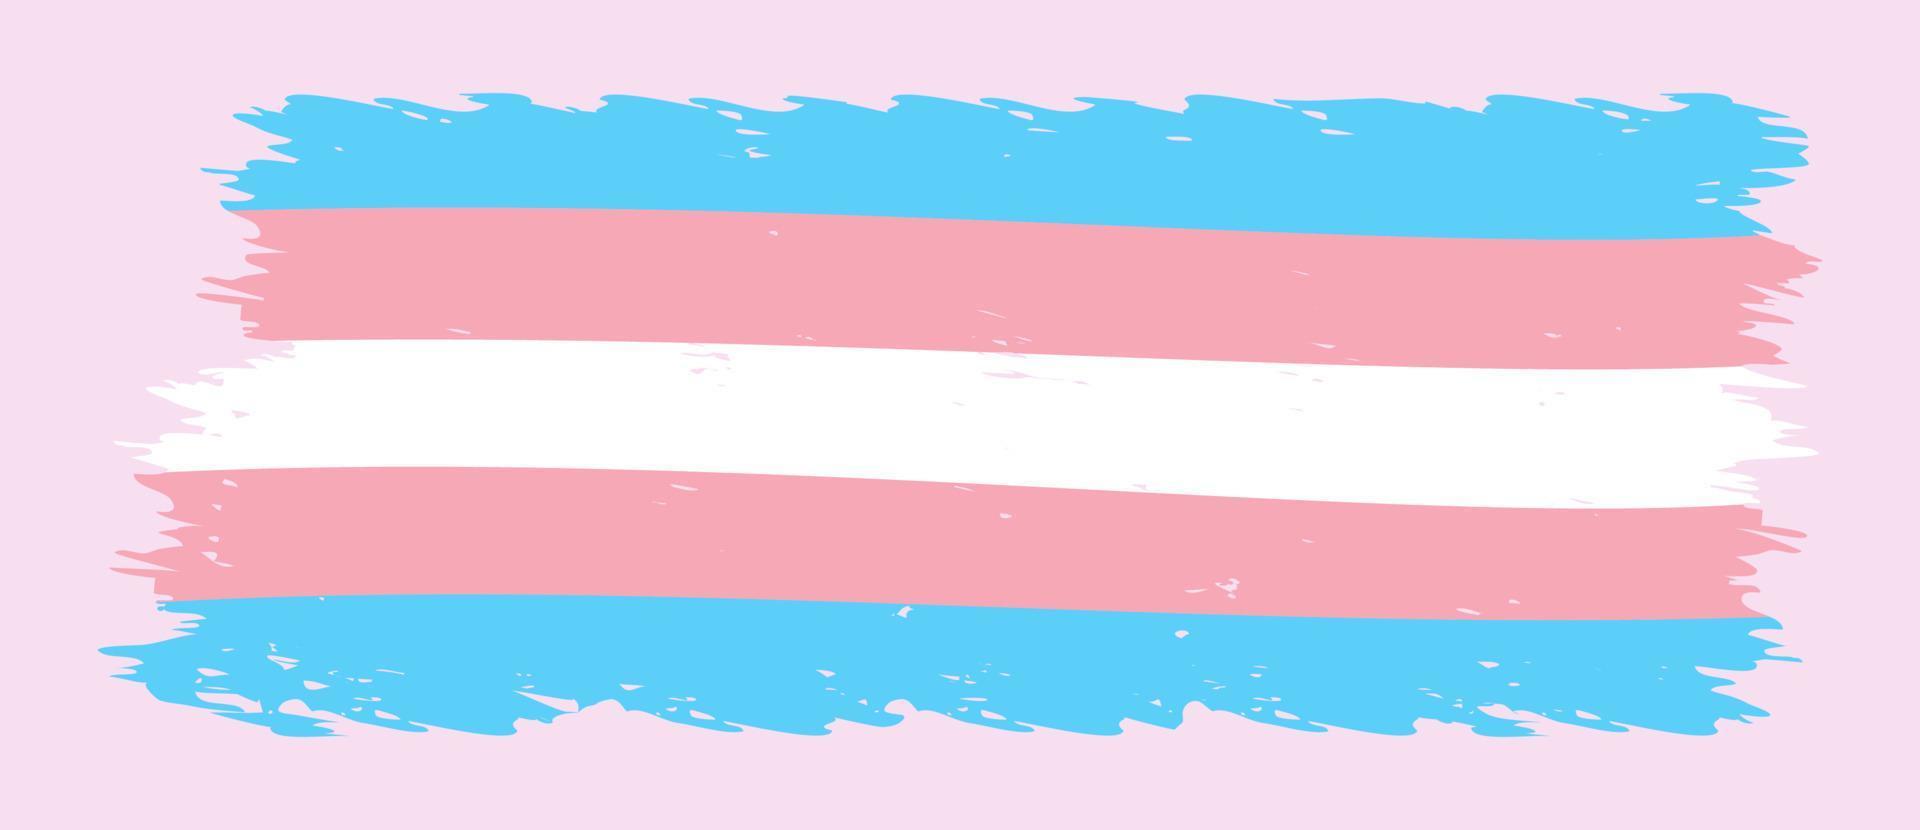 Transgender-Stolz-Flaggenvektorillustration lokalisiert auf lila Hintergrund vektor